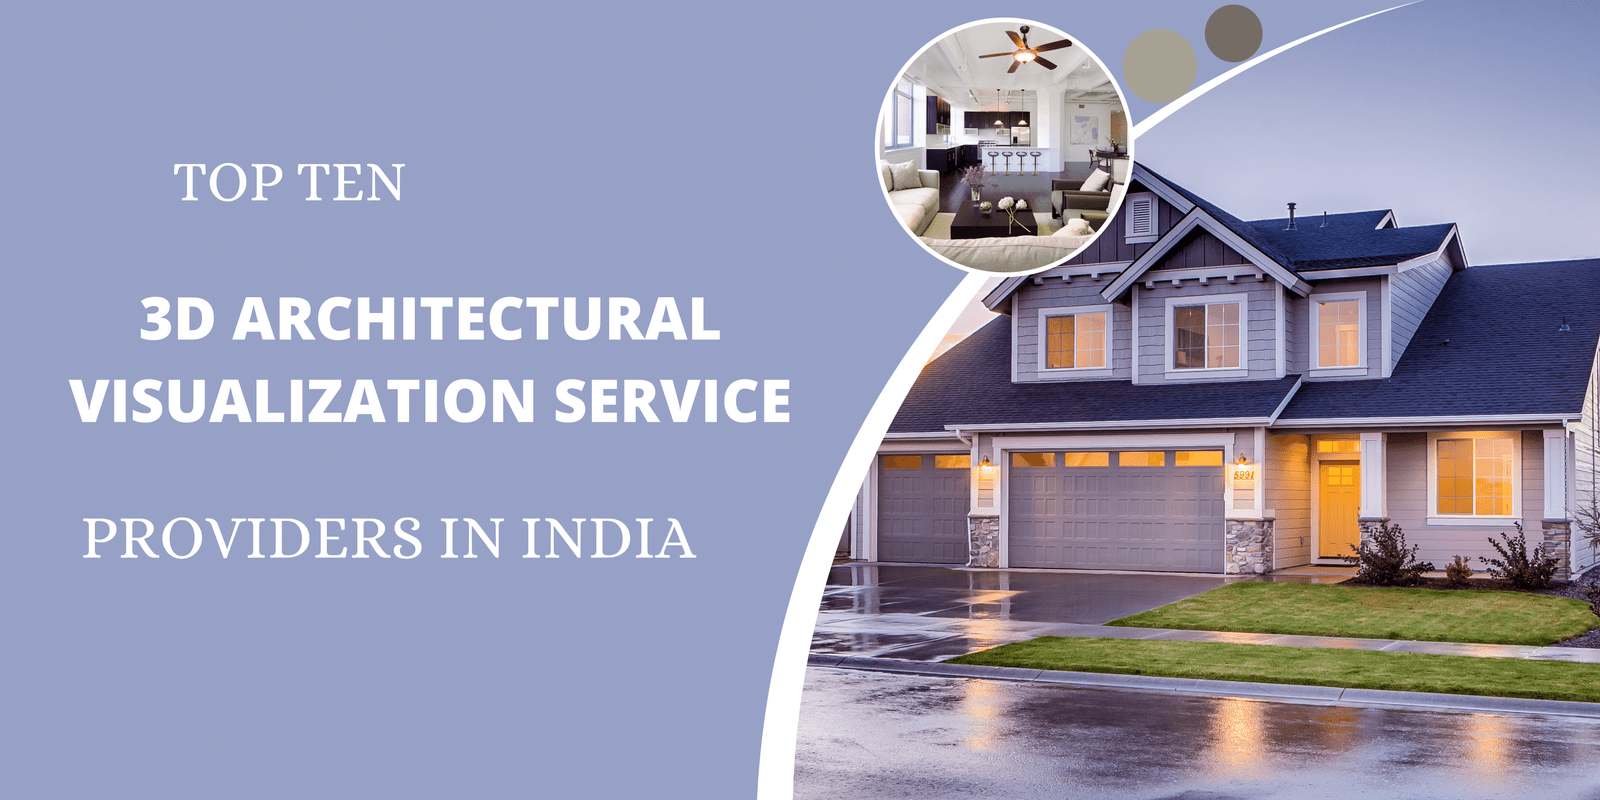 Top Ten 3D Architectural Visualization Service Providers in India